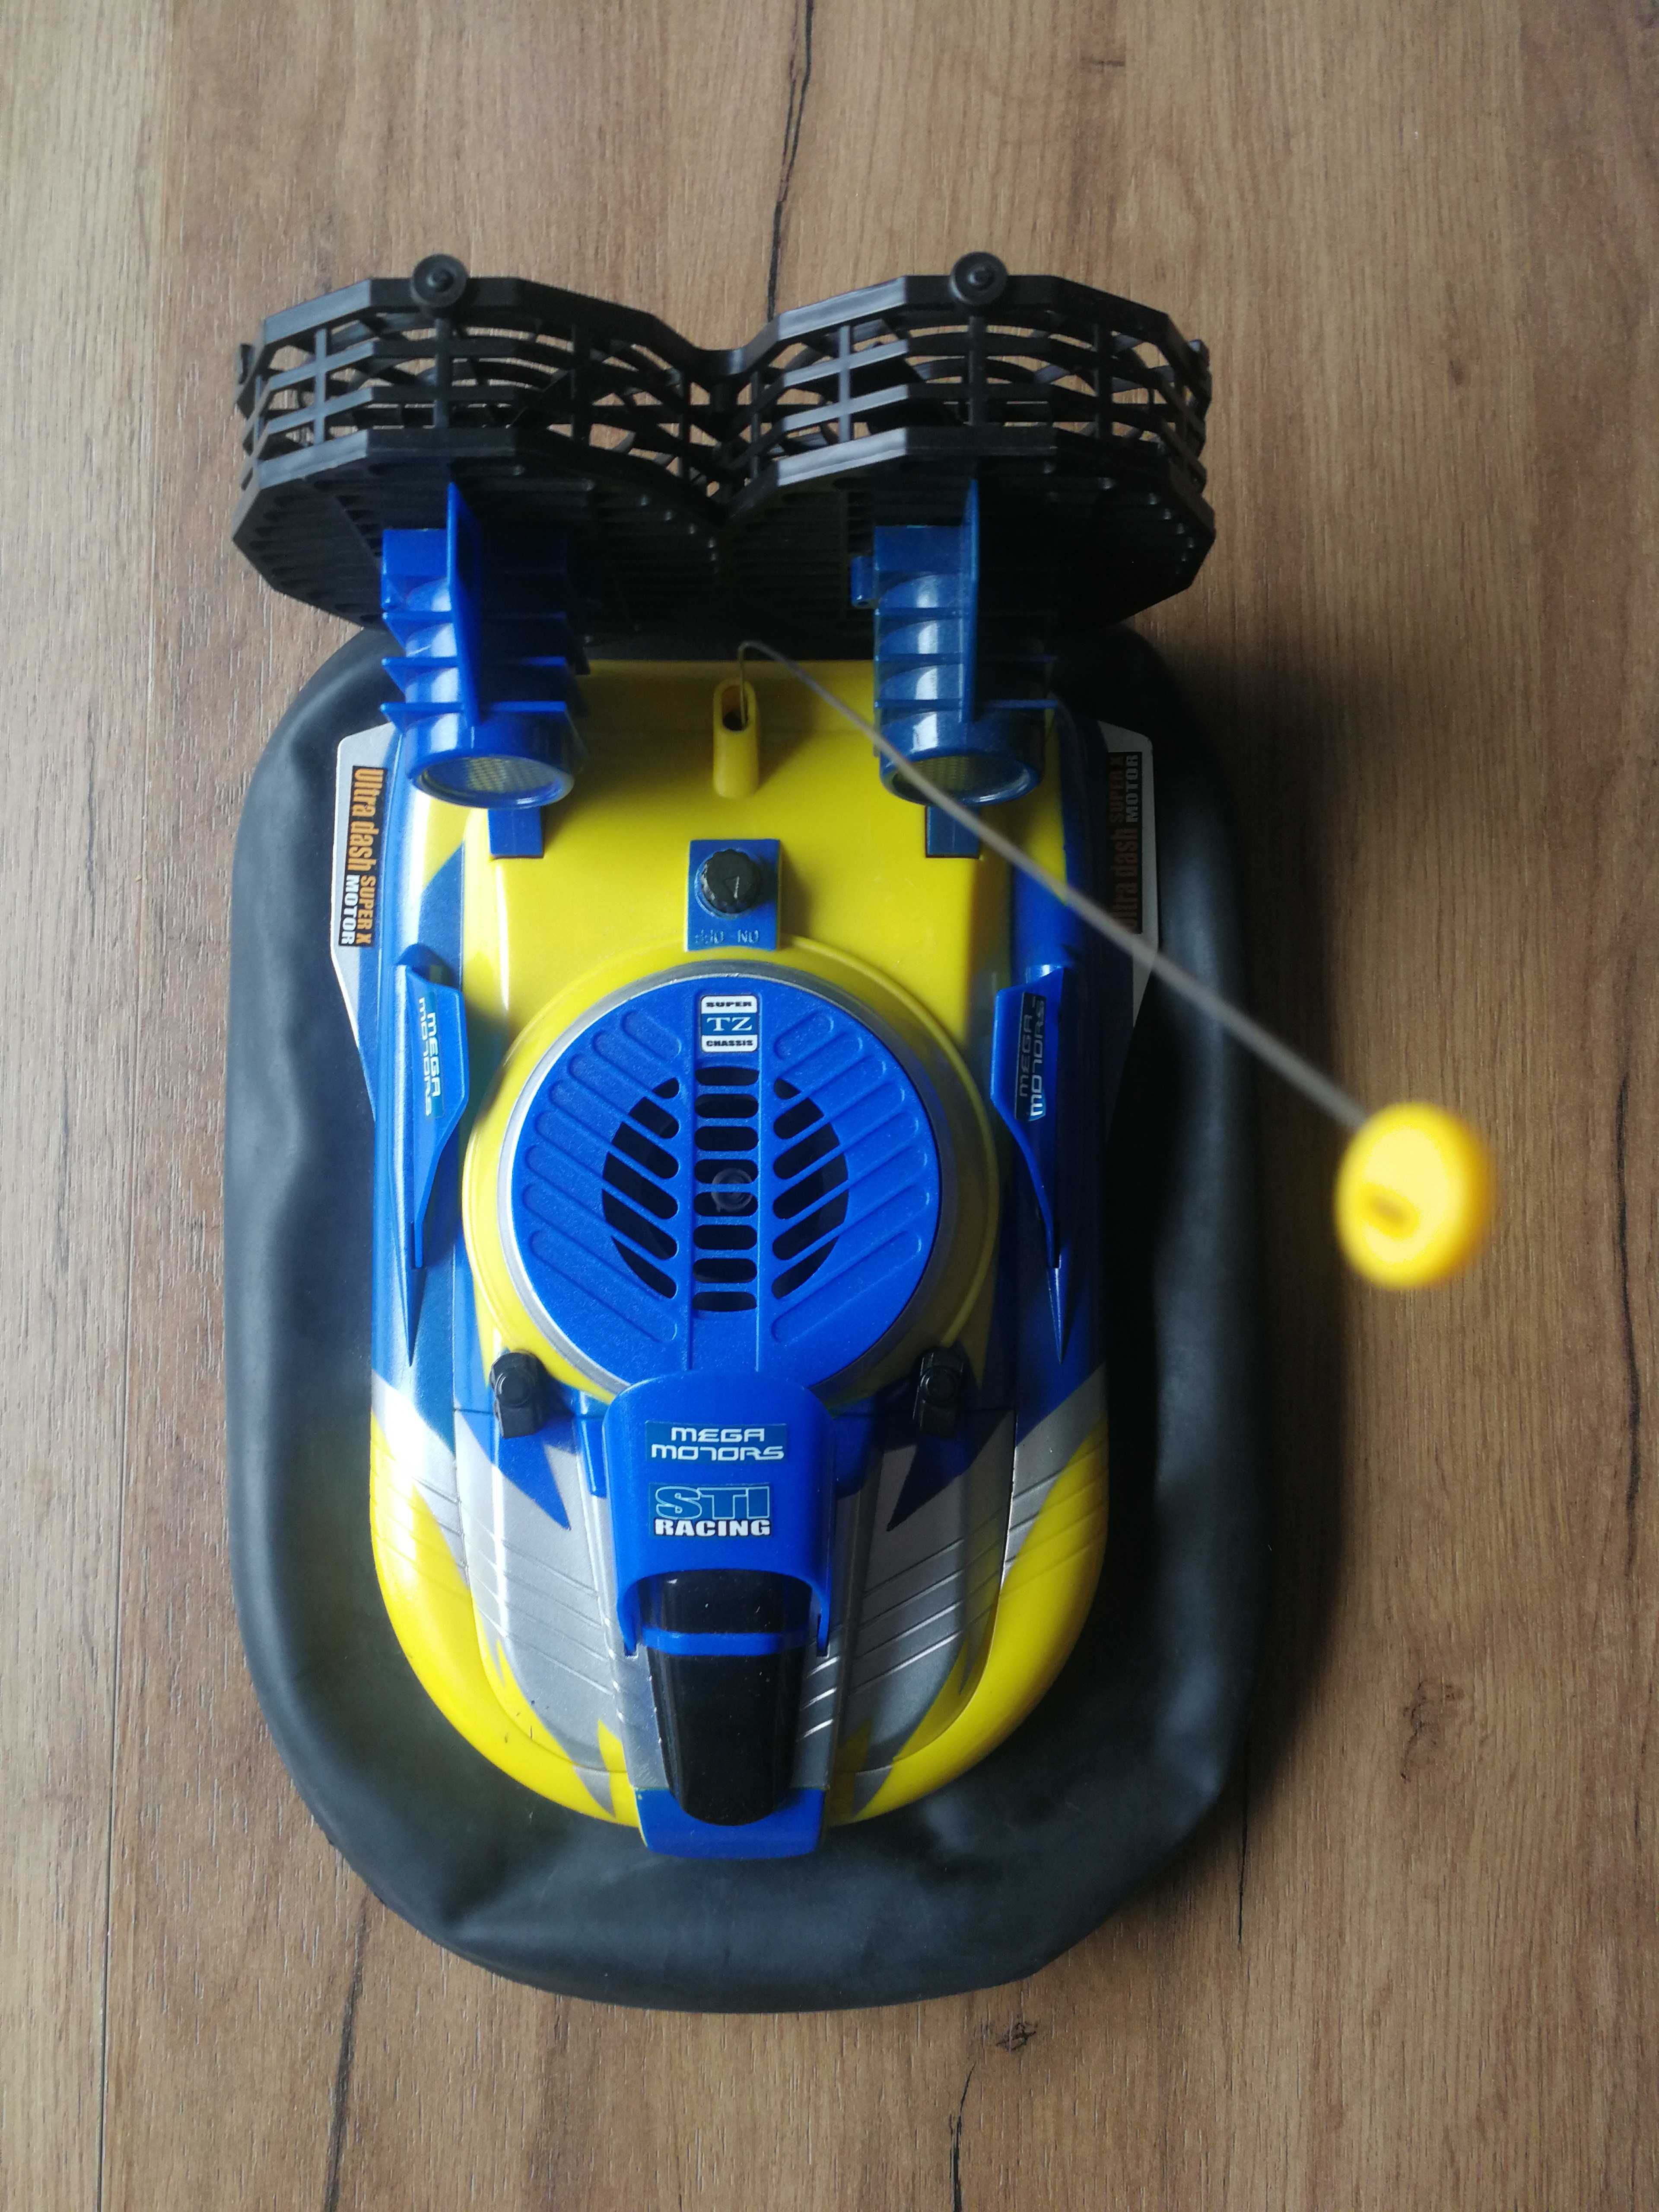 Mini Hovercraft radio controlled